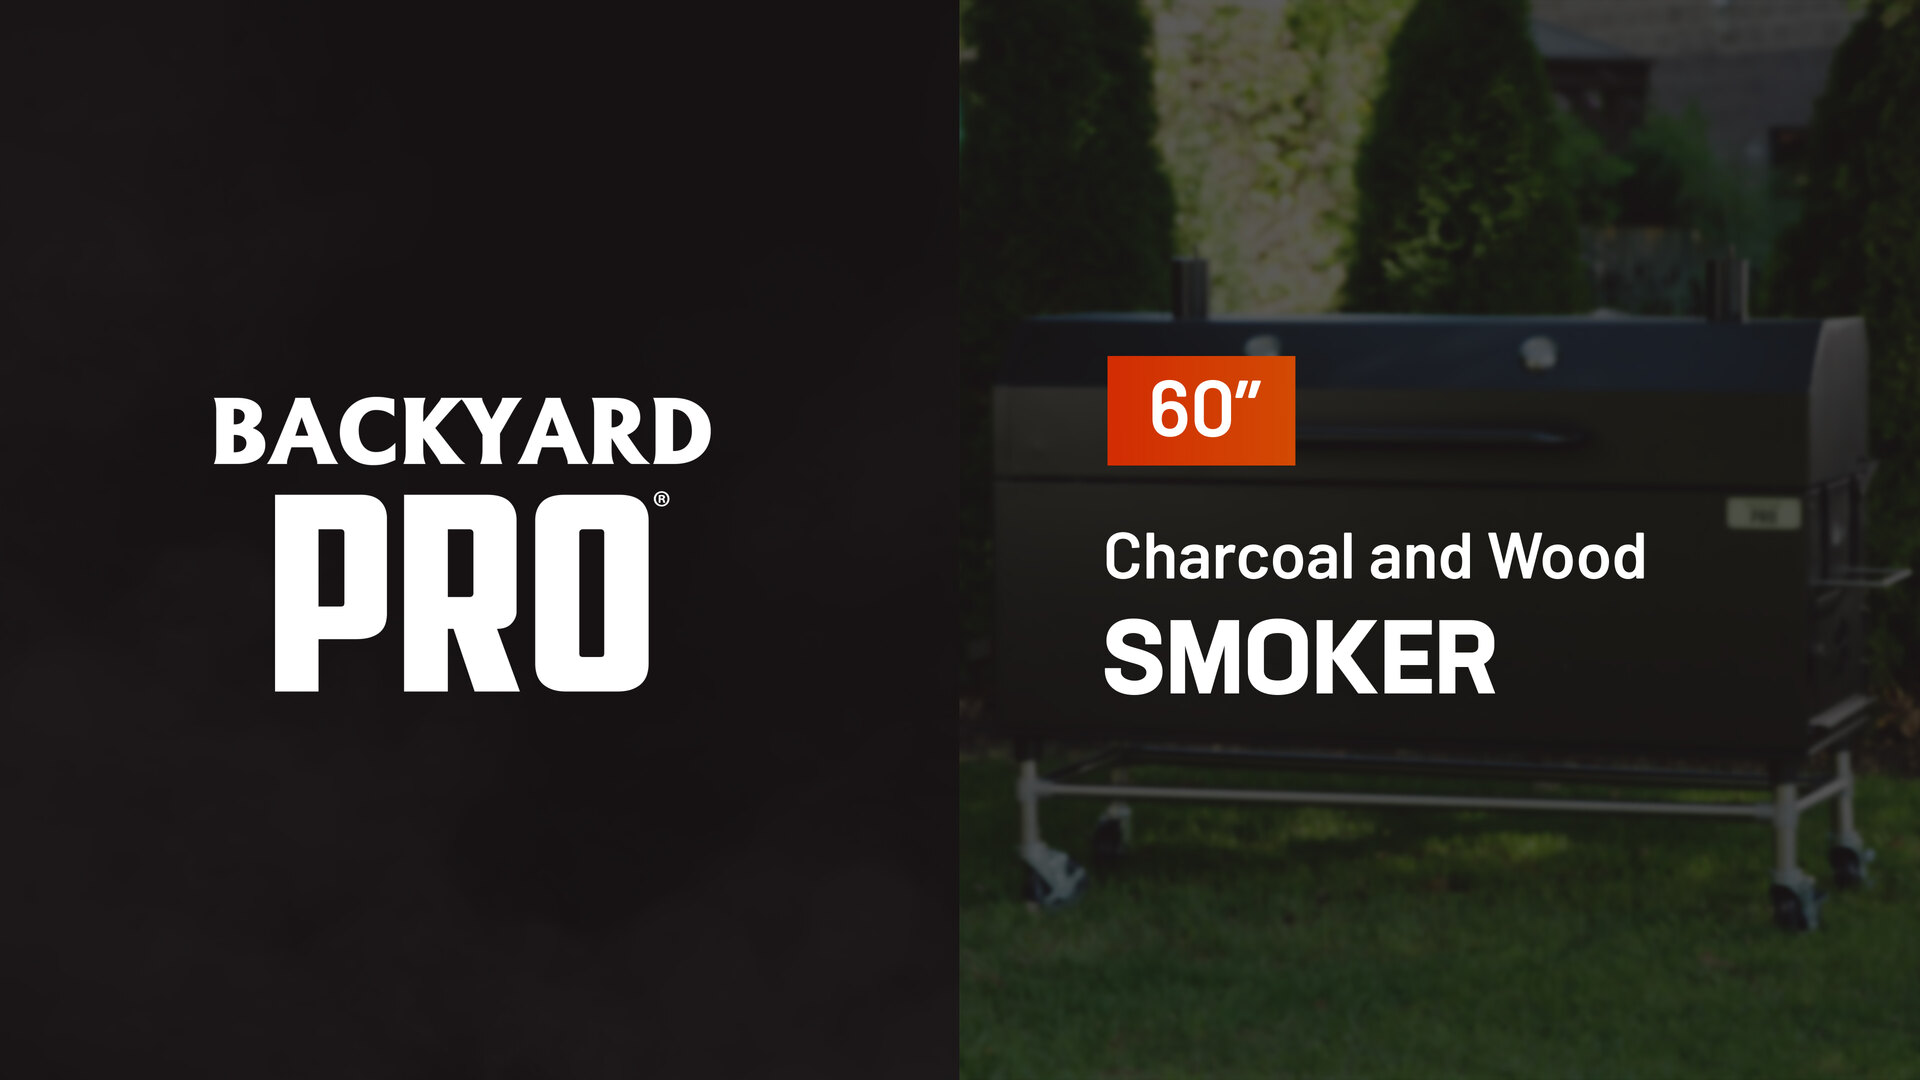 Backyard Pro 554SMOKR60KD 60 Charcoal / Wood Smoker Grill with Adjustable  Grates and Dome